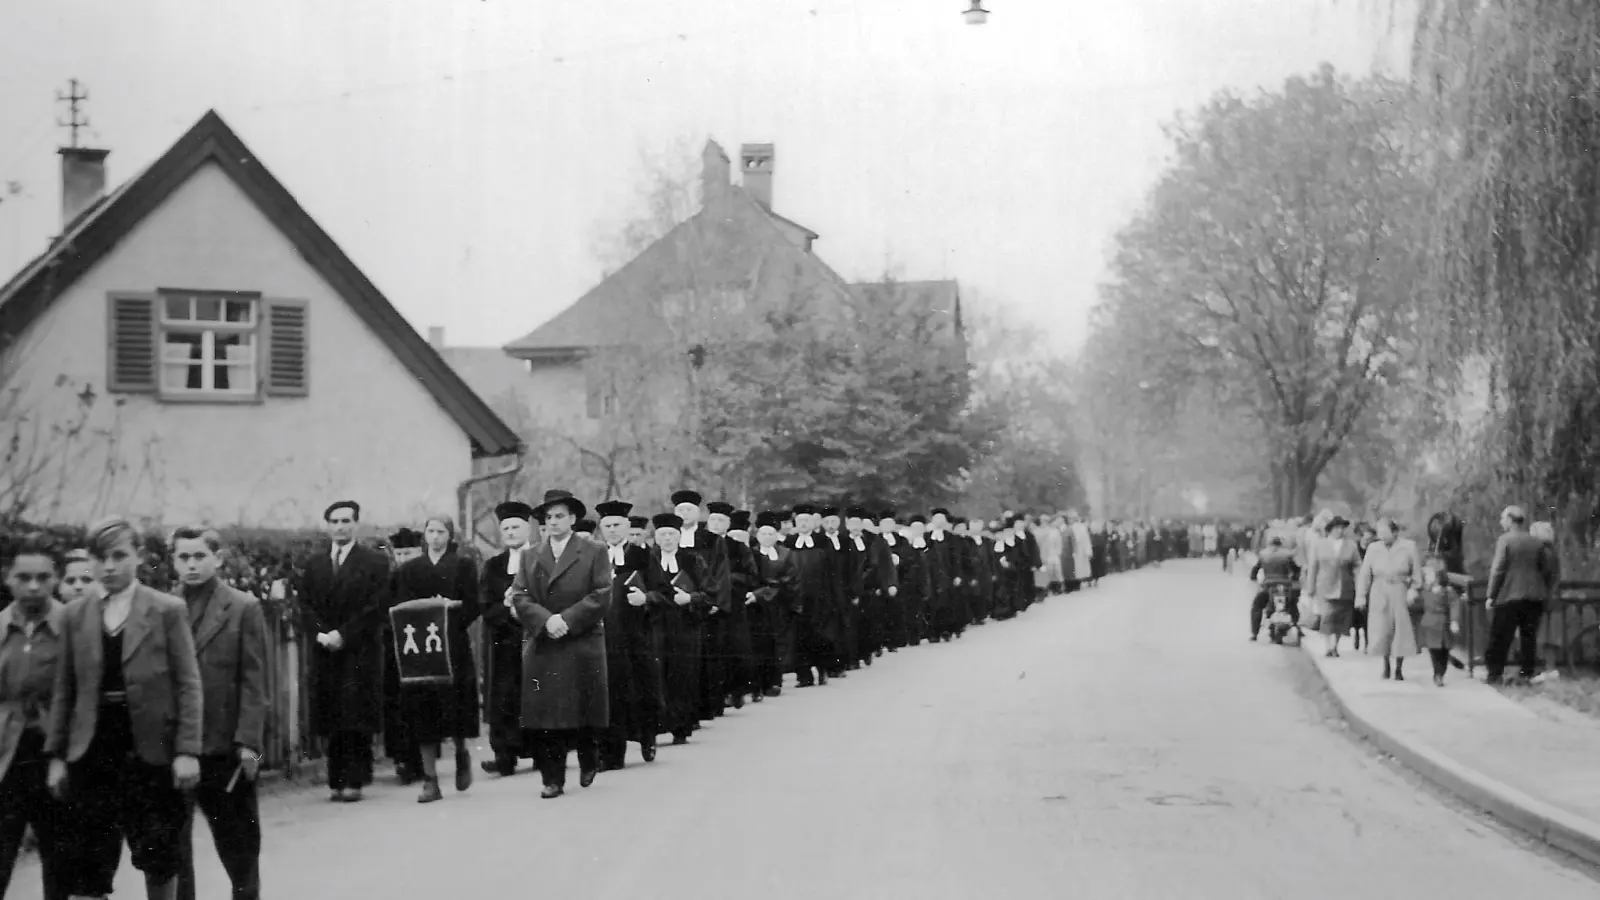 Festumzug vom Betsaal in der Frühlingsstraße zur Friedenskirche am 25. Oktober 1953. (Foto: Friedenskirche)